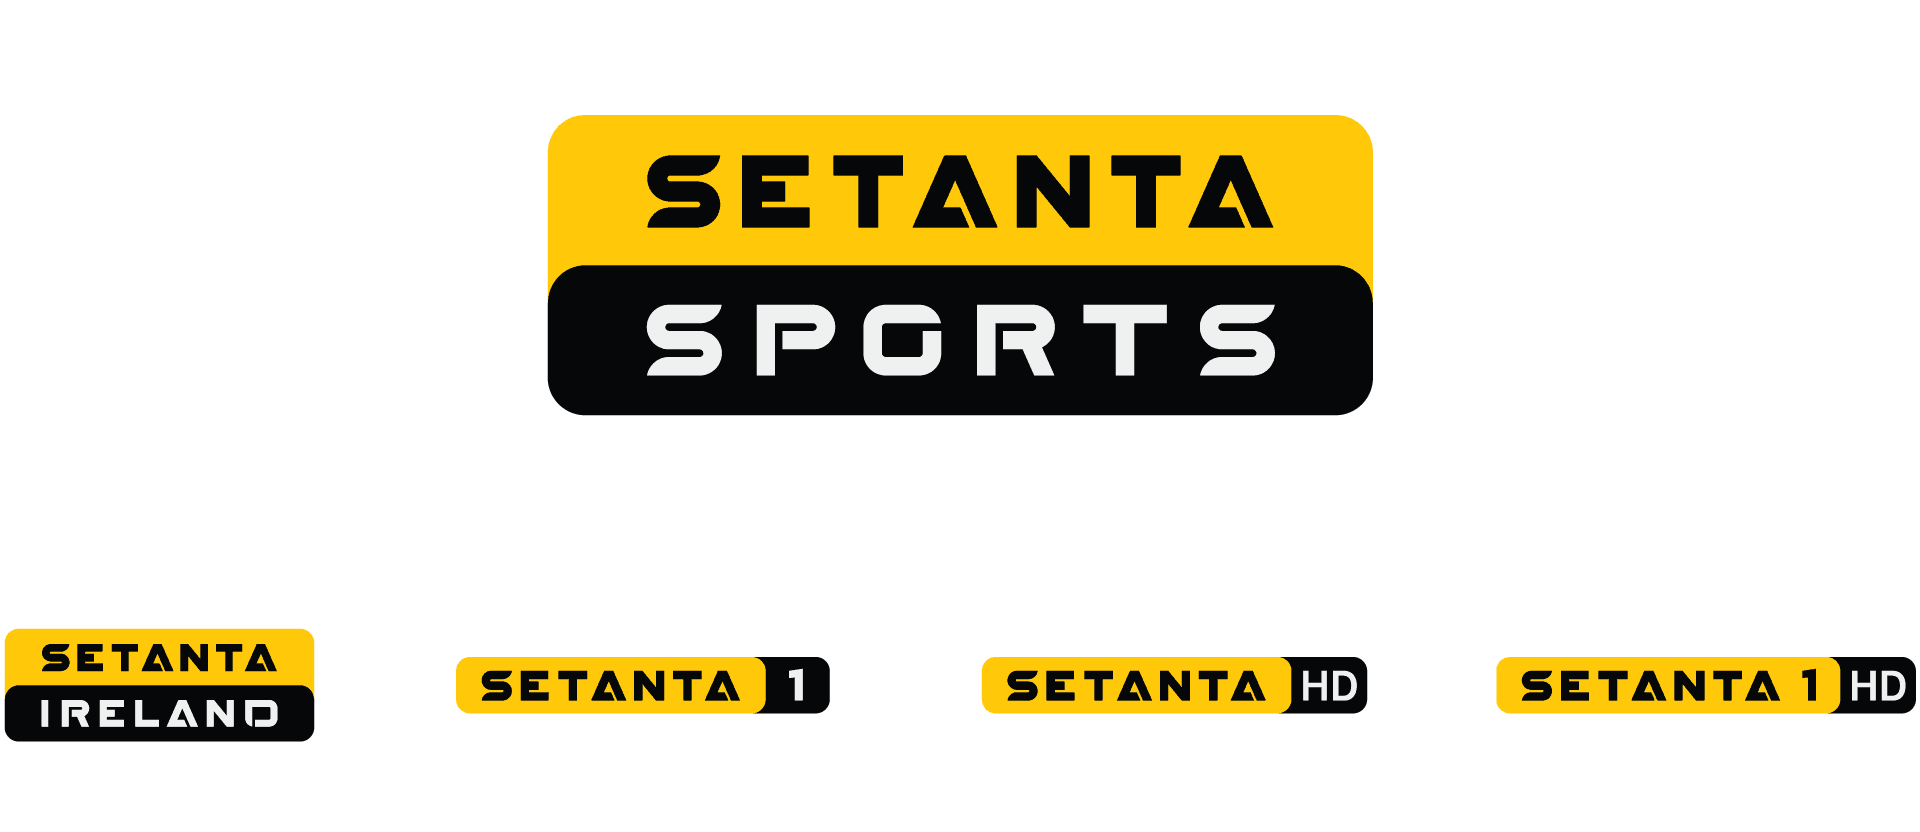 Setanta sport eurasia. Сетанта спорт 1 Евразия. Setanta Sport логотип Телеканал.